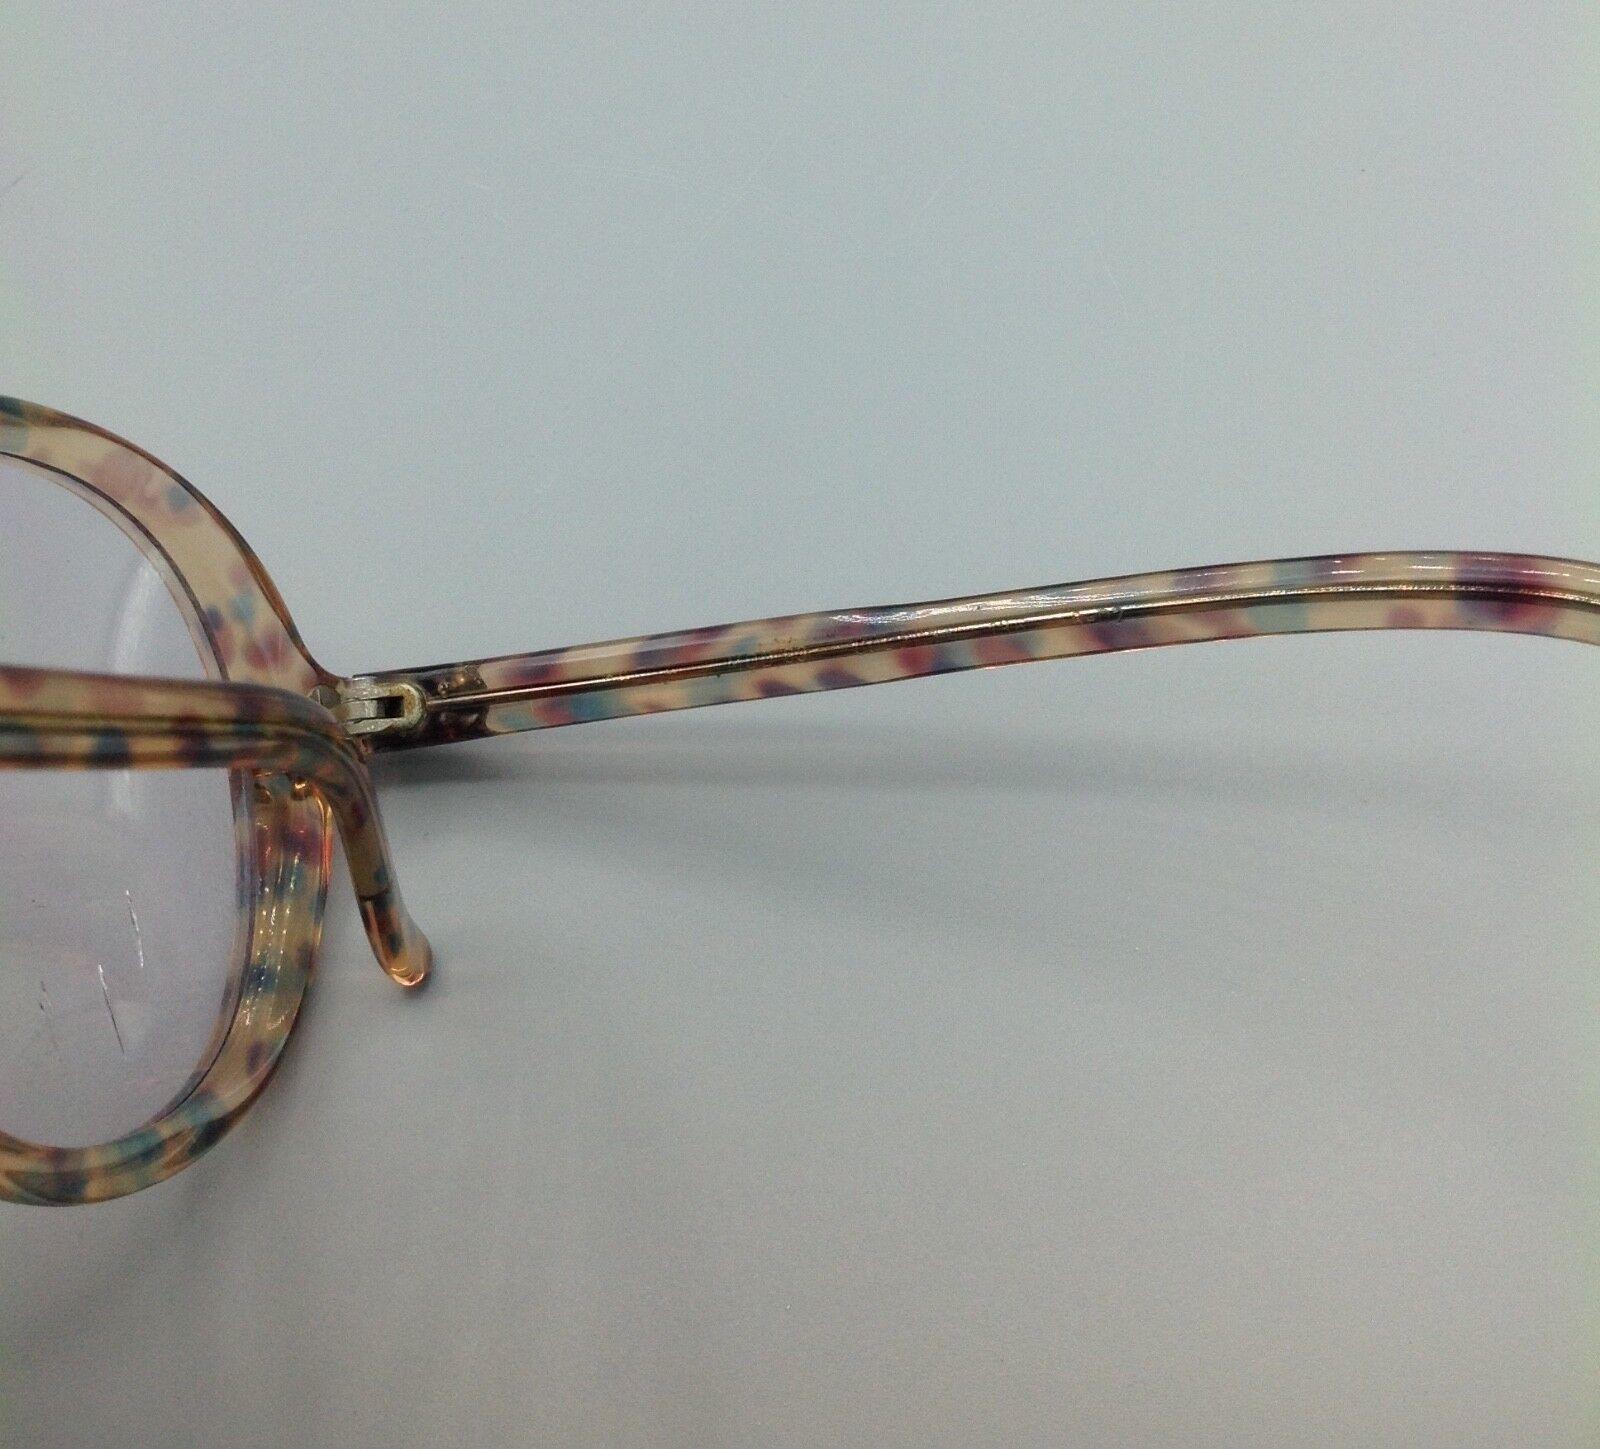 Silhouette occhiale Frame mode 53 col 203 eyewear vintage brillen lunettes gafas 60s